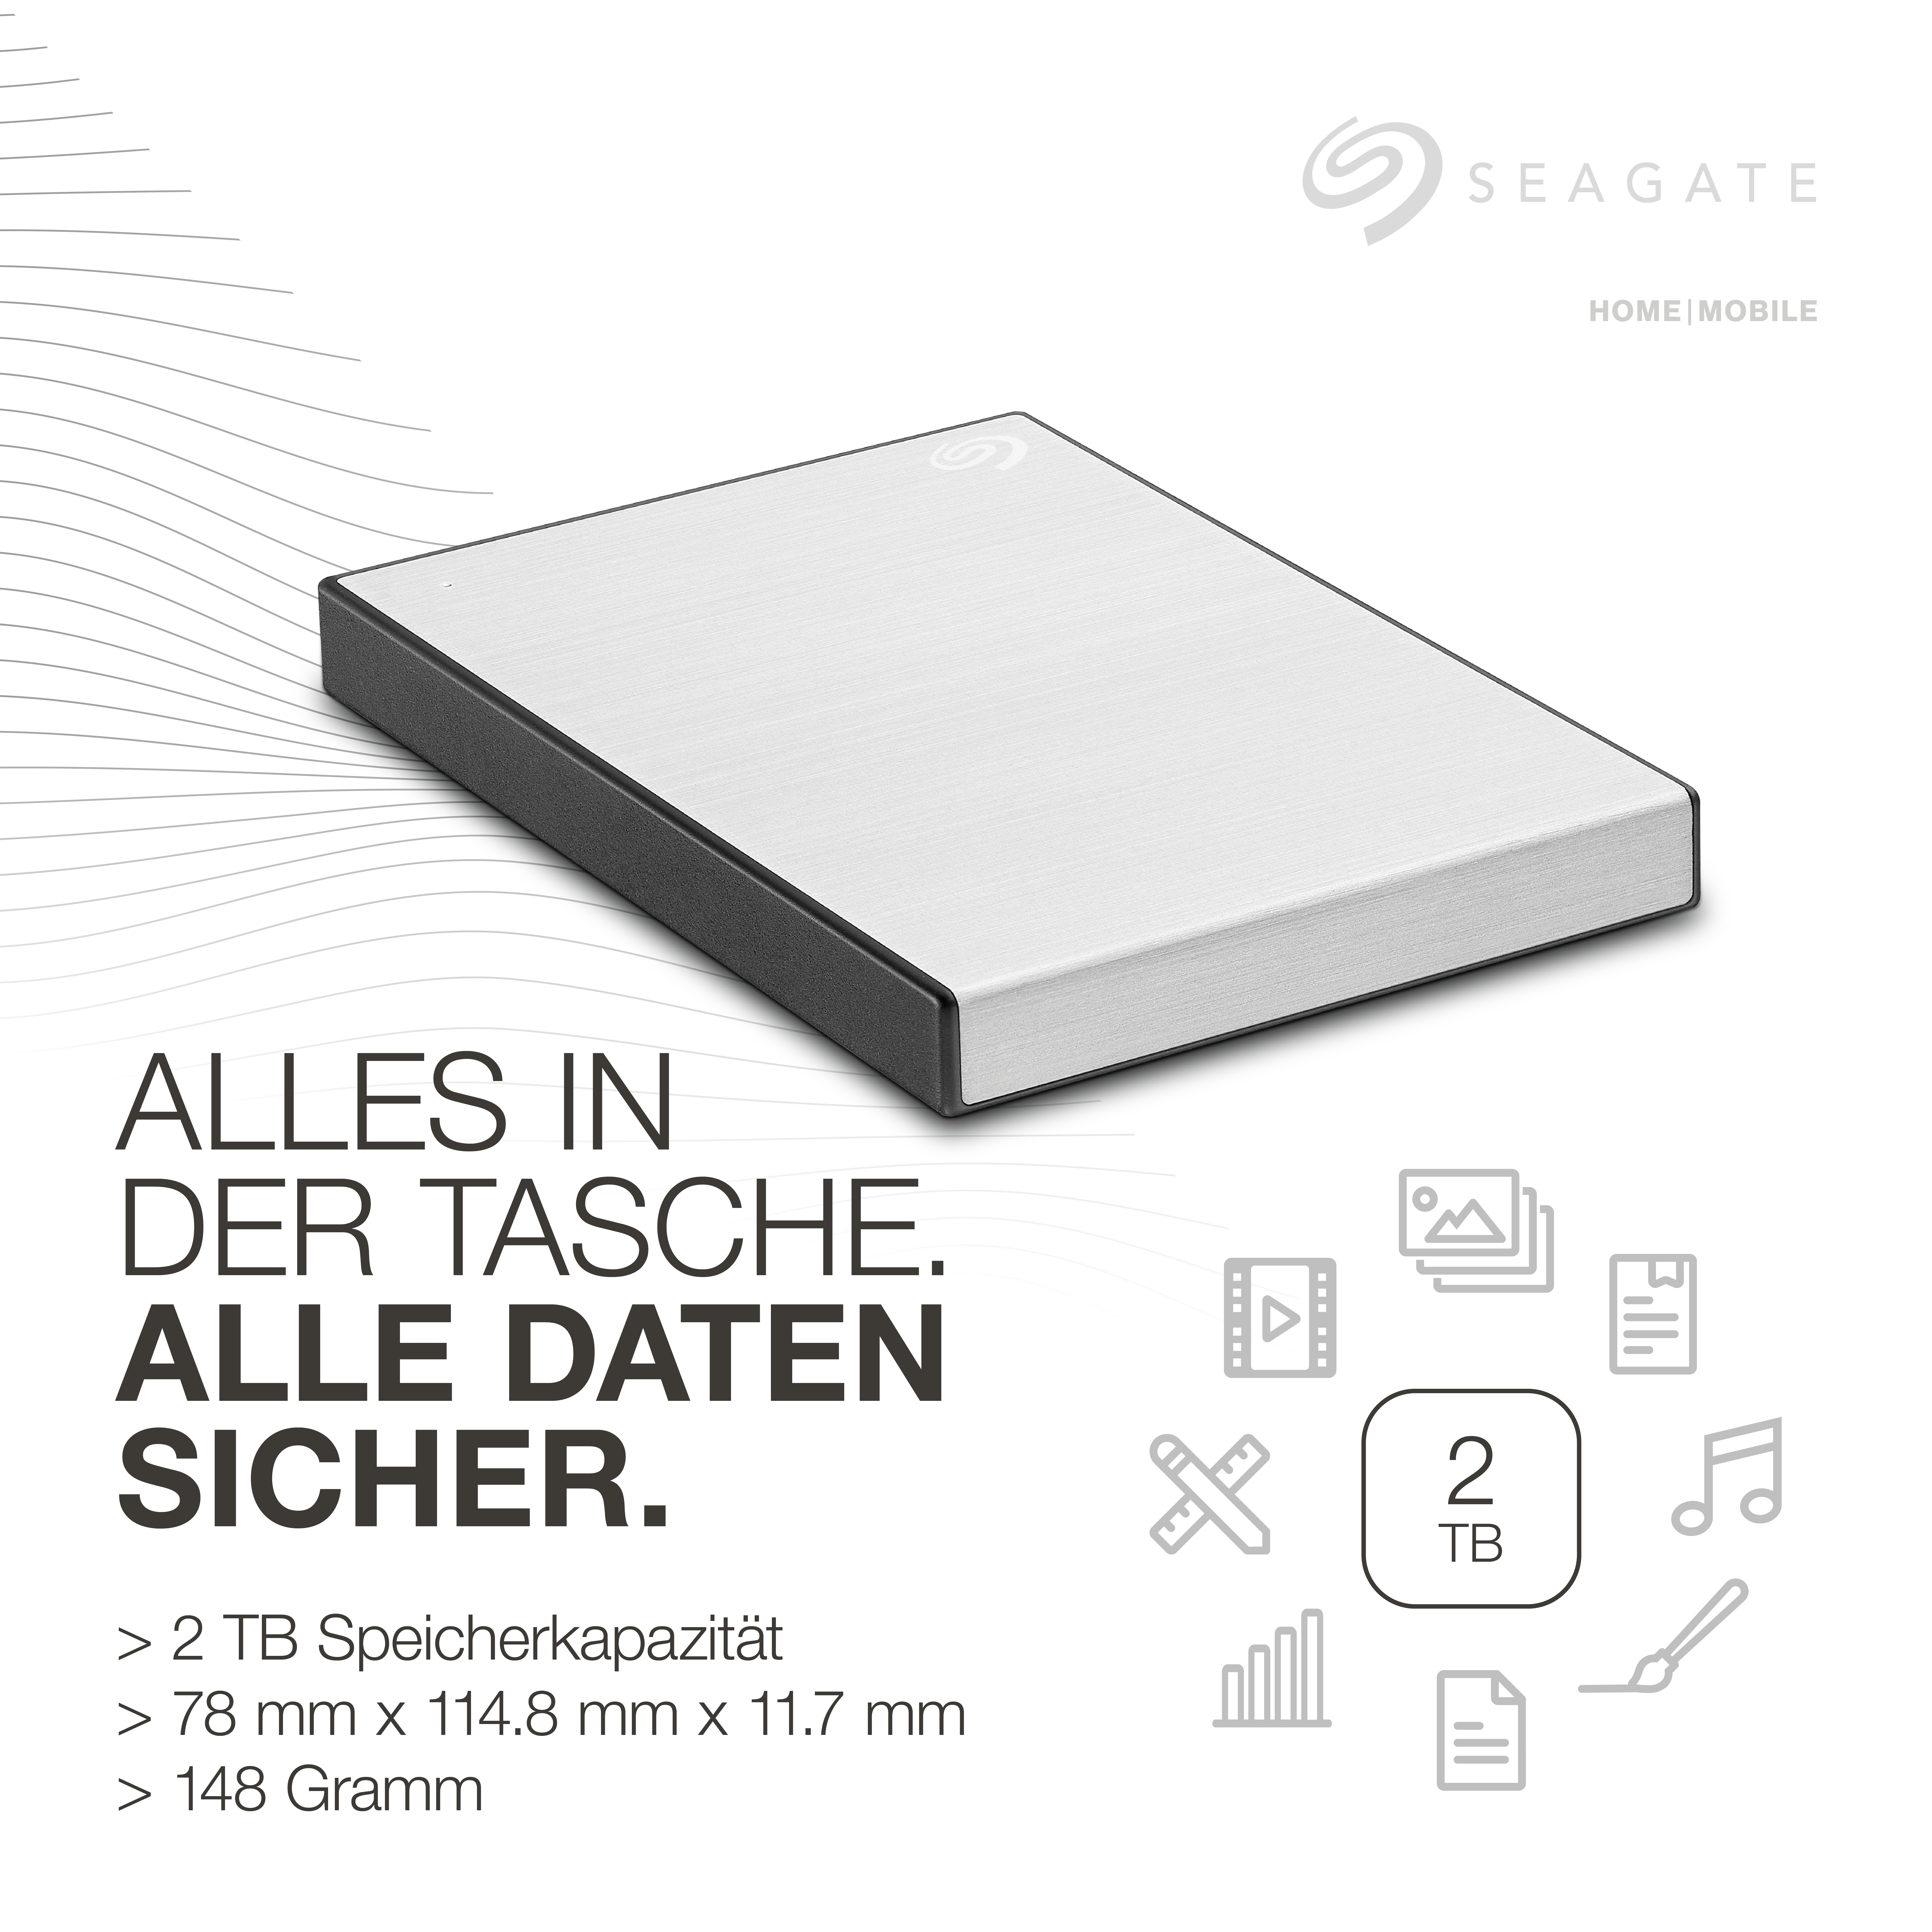 SEAGATE One extern, Festplatte, TB 2 Silber 2,5 Touch HDD, Passwort Zoll, mit